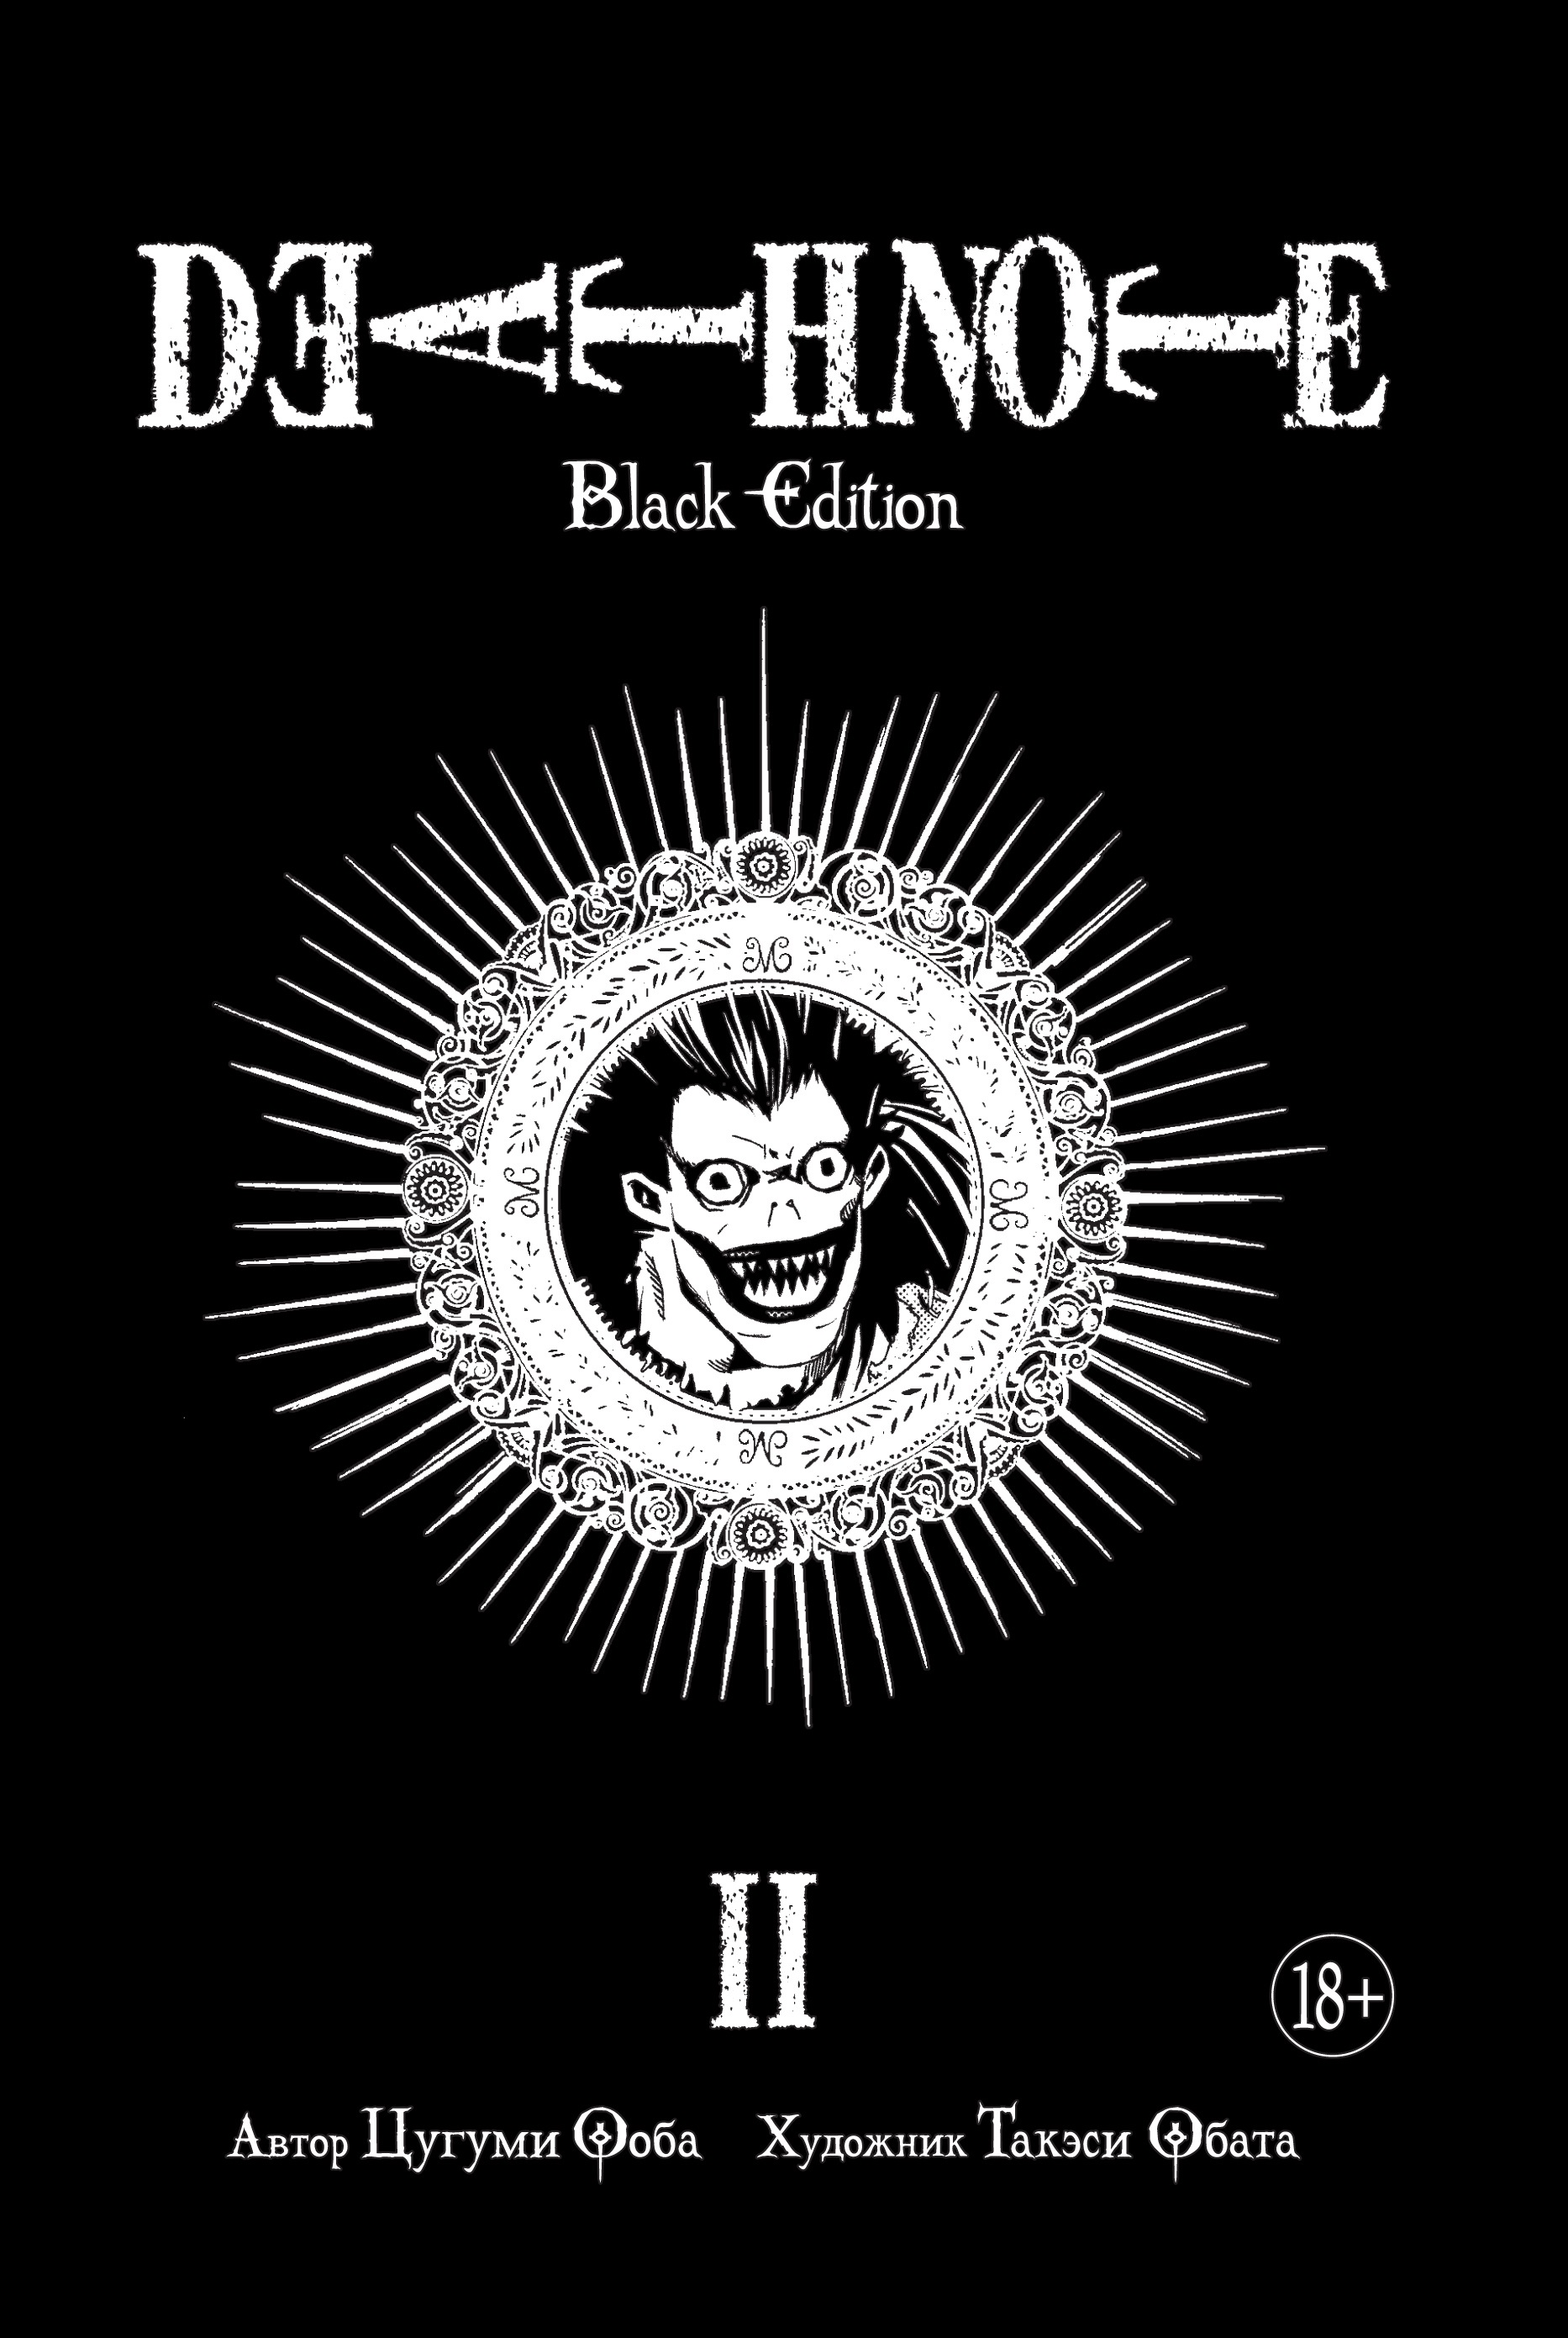 манга азбука death note black edition книга 2 Ооба Цугуми Death Note. Black Edition. Книга 2: манга